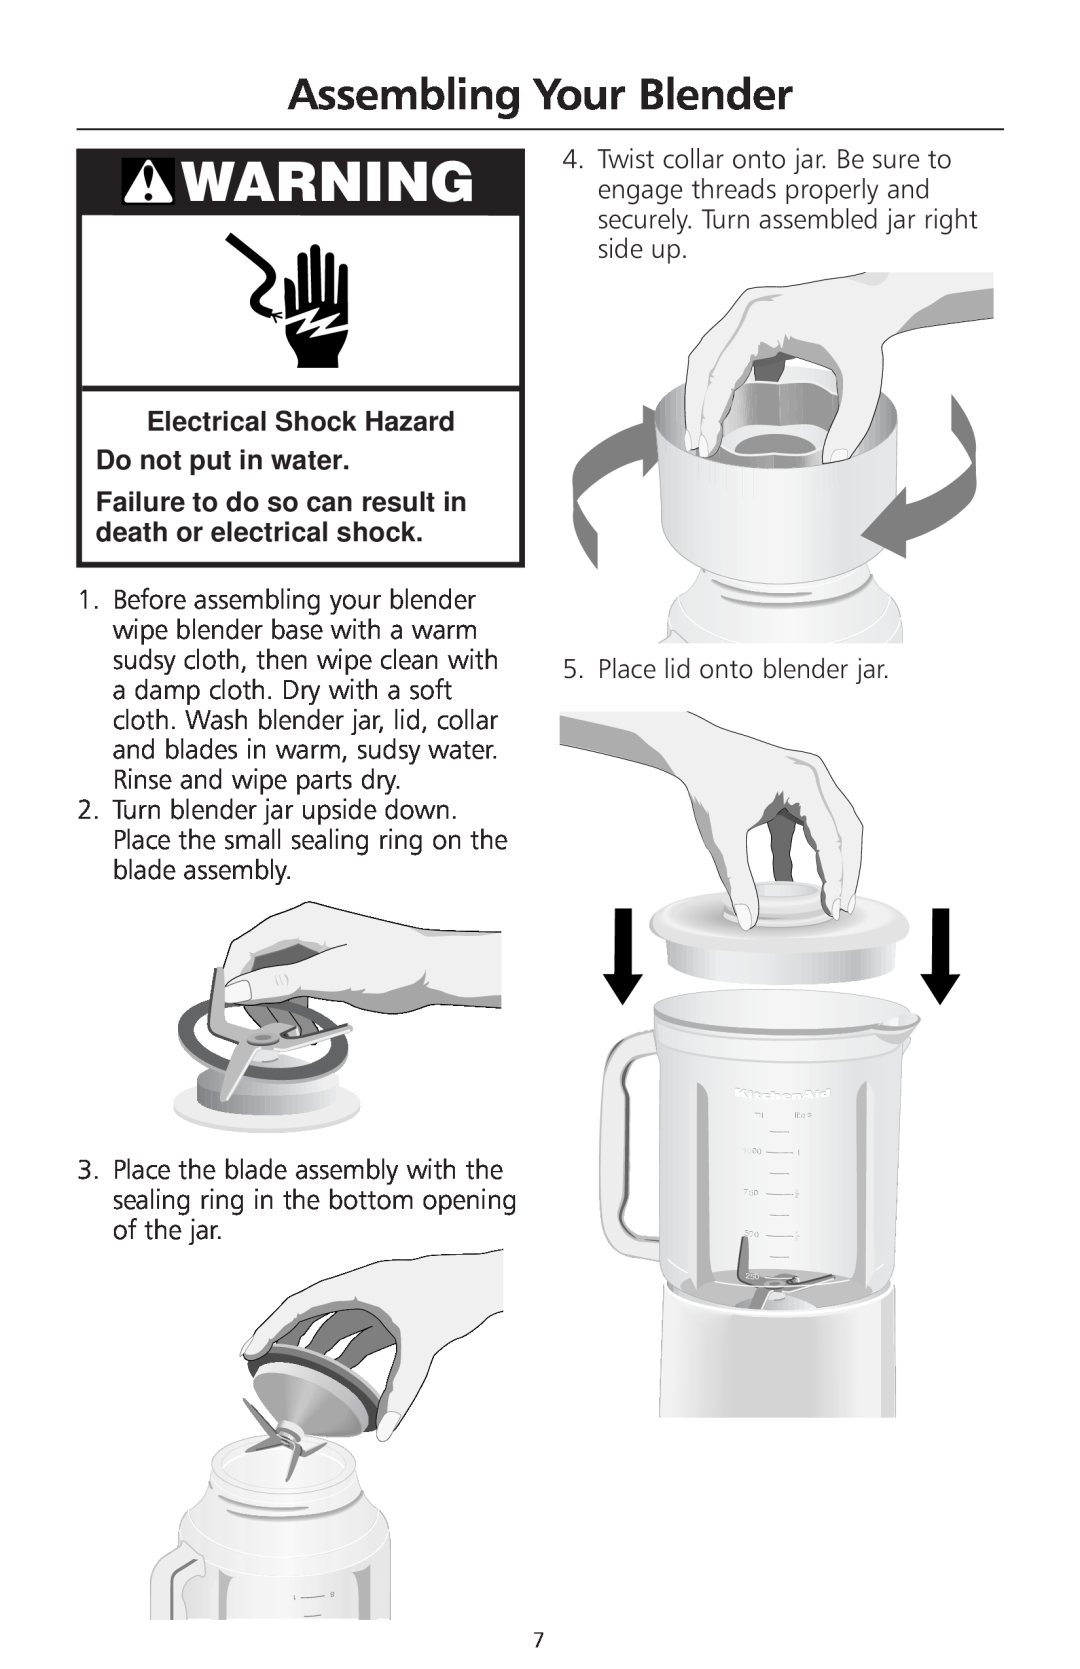 KitchenAid 3 Speed Classic Blender manual Assembling Your Blender, Electrical Shock Hazard Do not put in water 